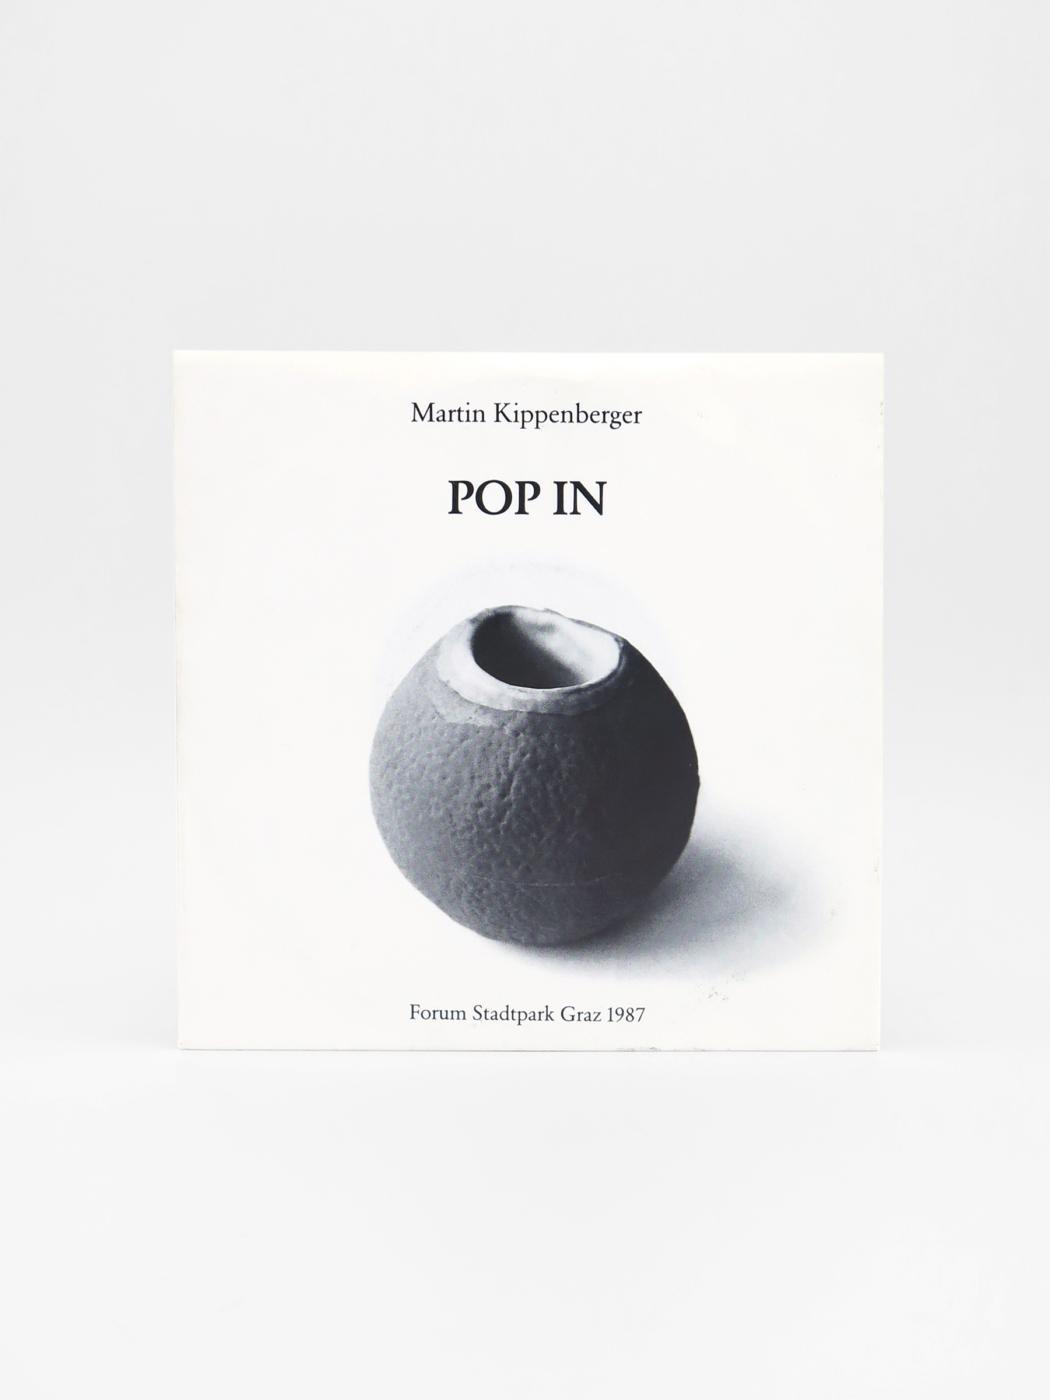 Martin Kippenberger, Pop In